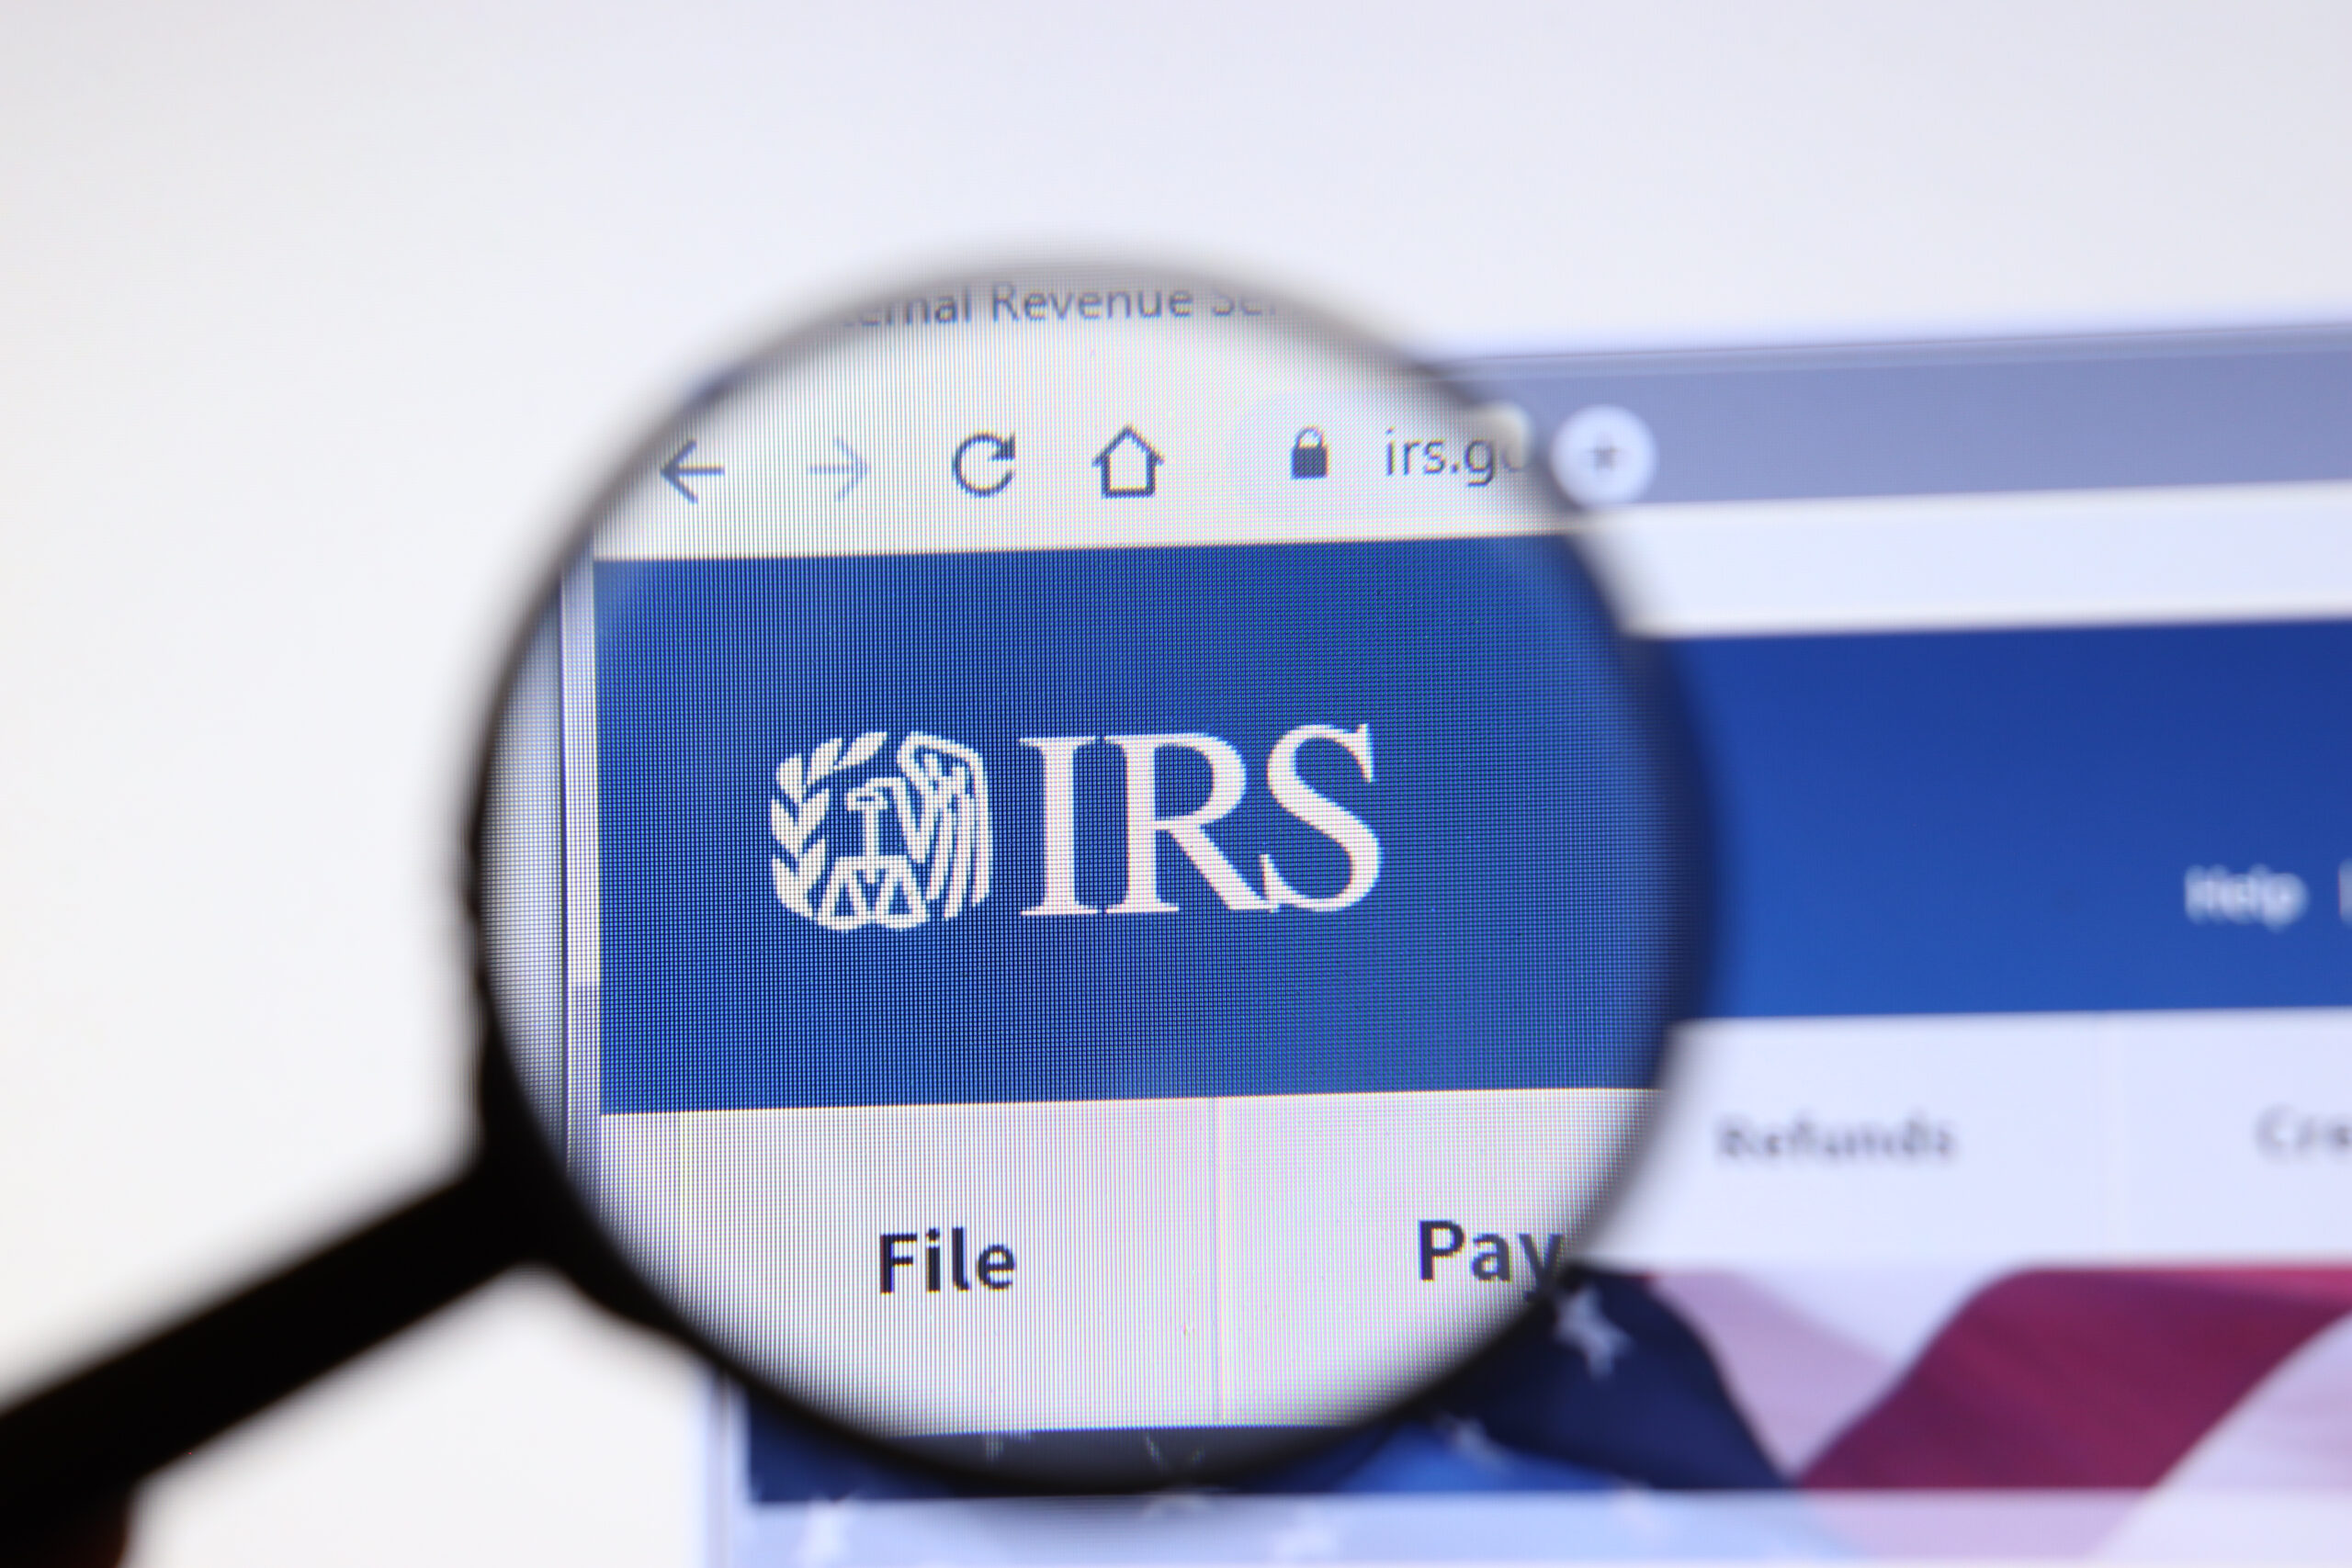 A screenshot of the IRS website